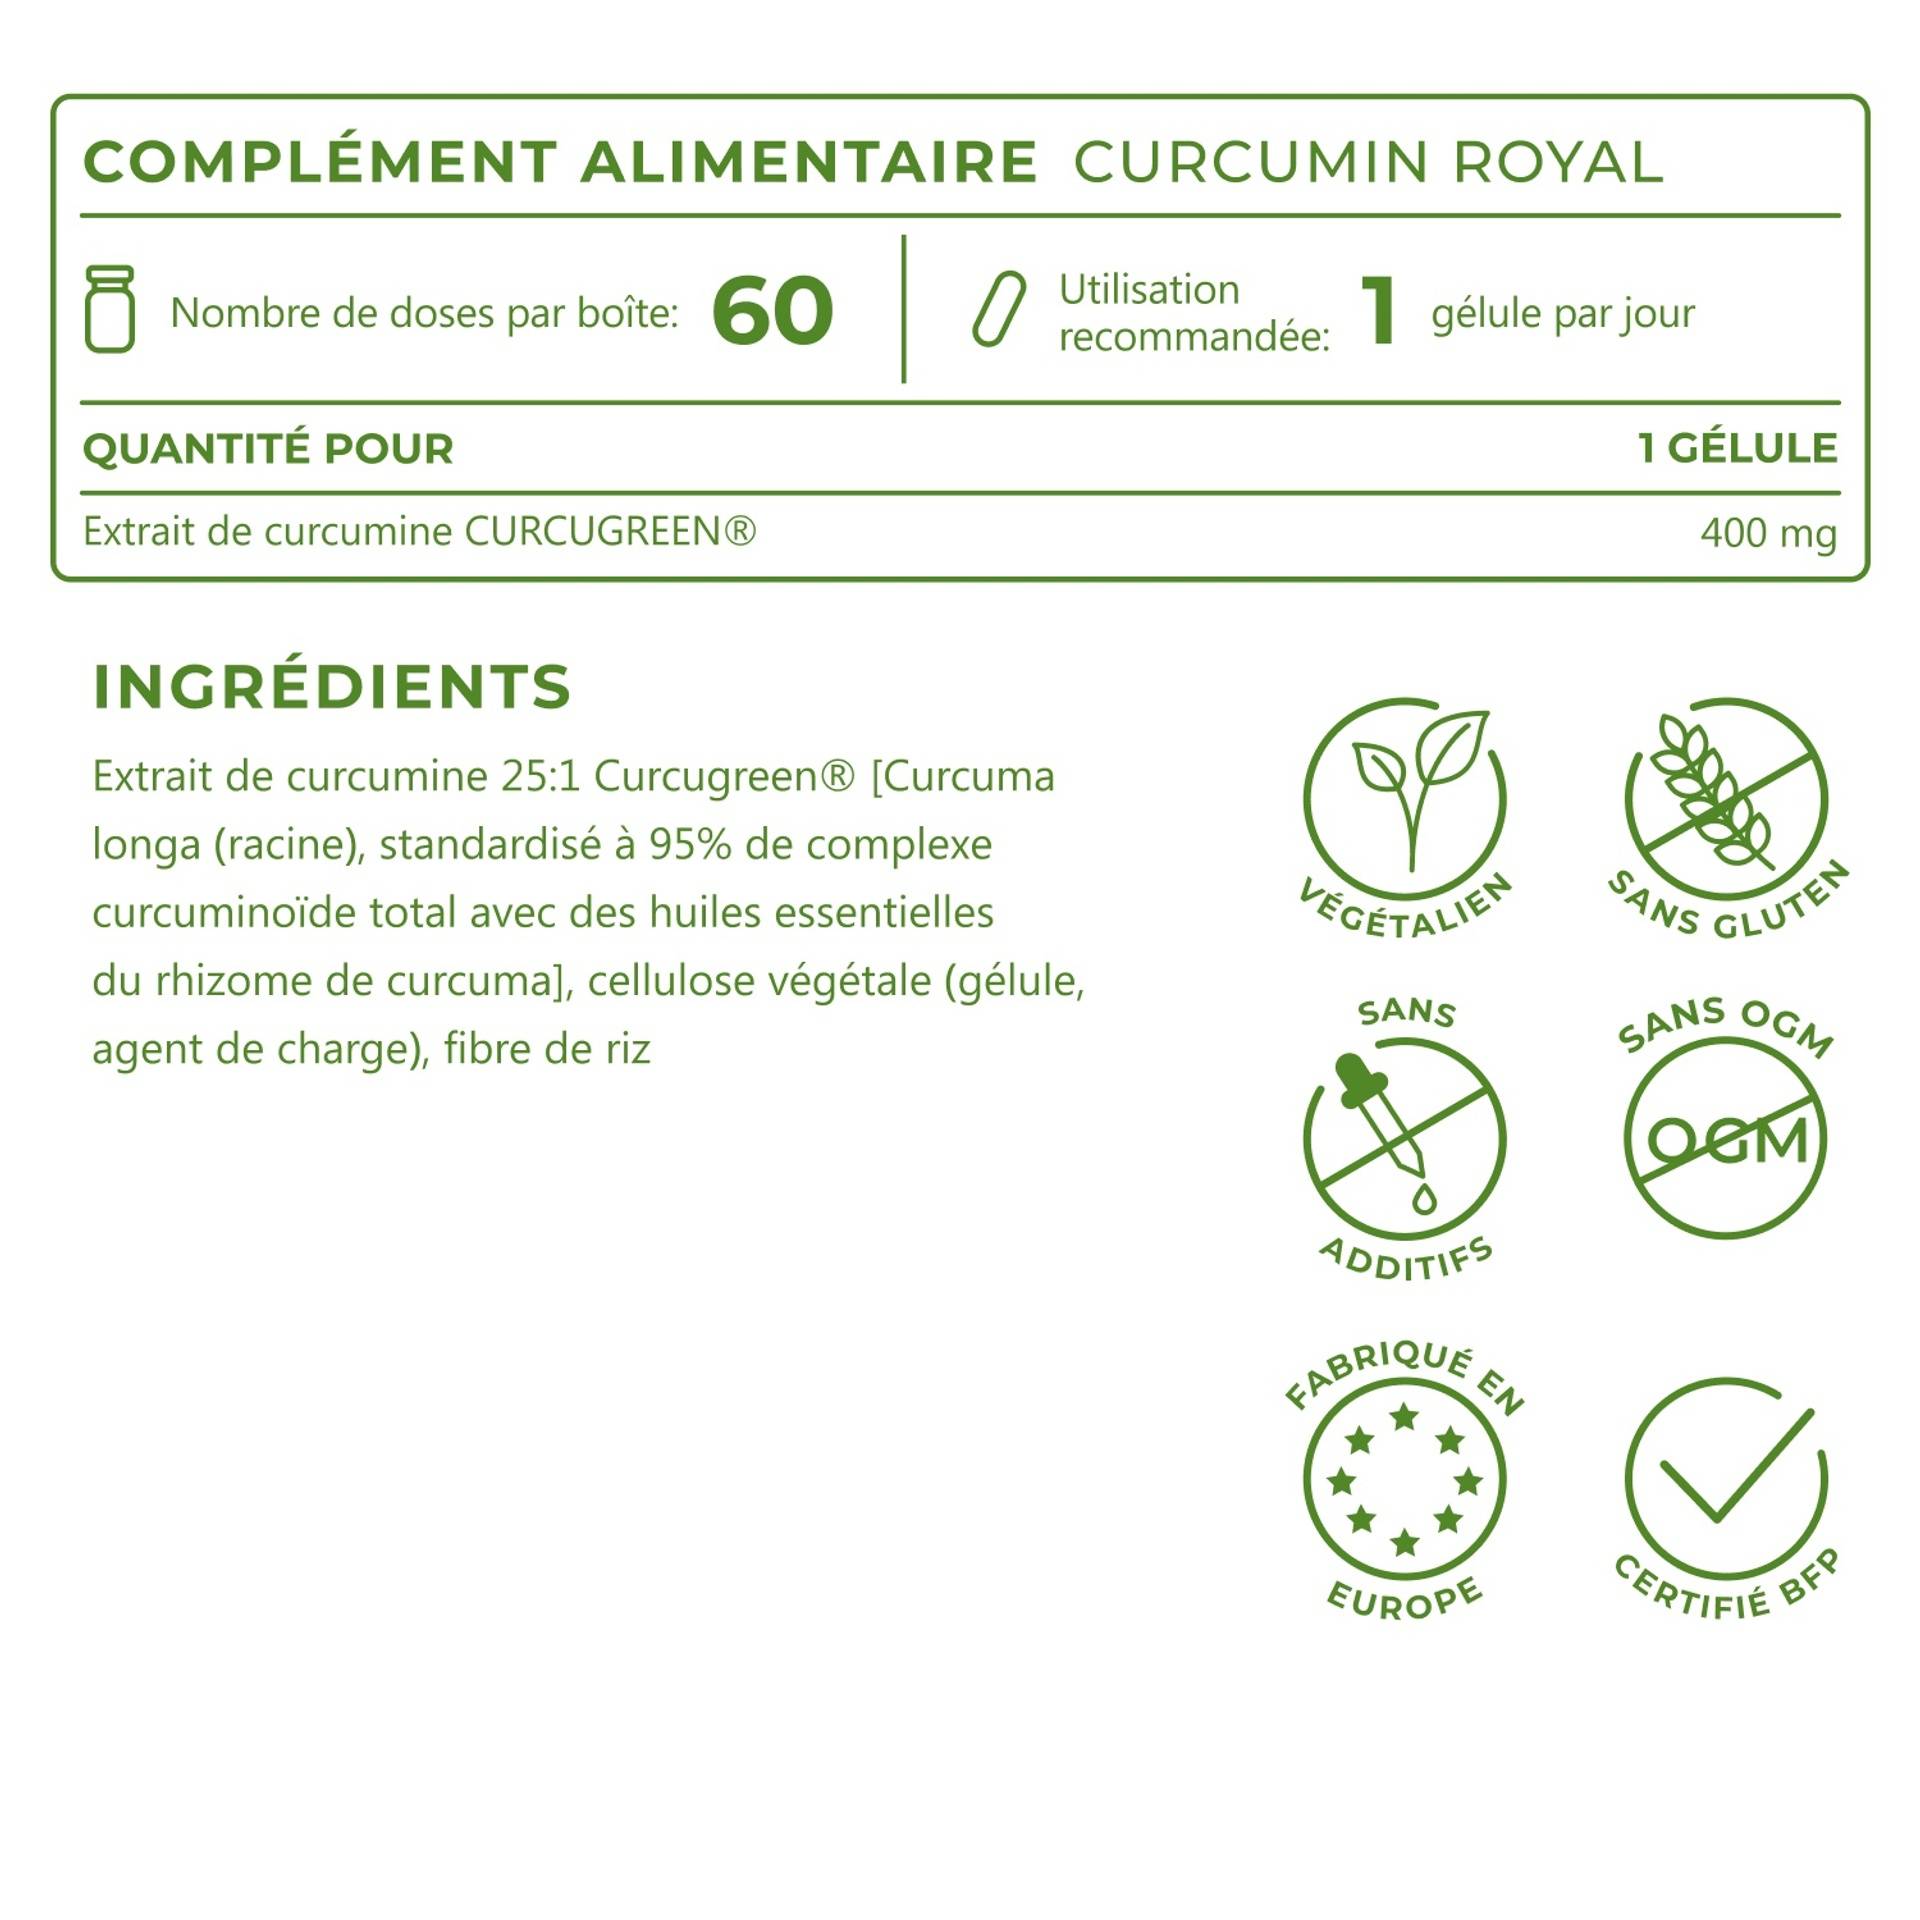 5_FR_Ingredients_Curcumin Royal_6927-11.png